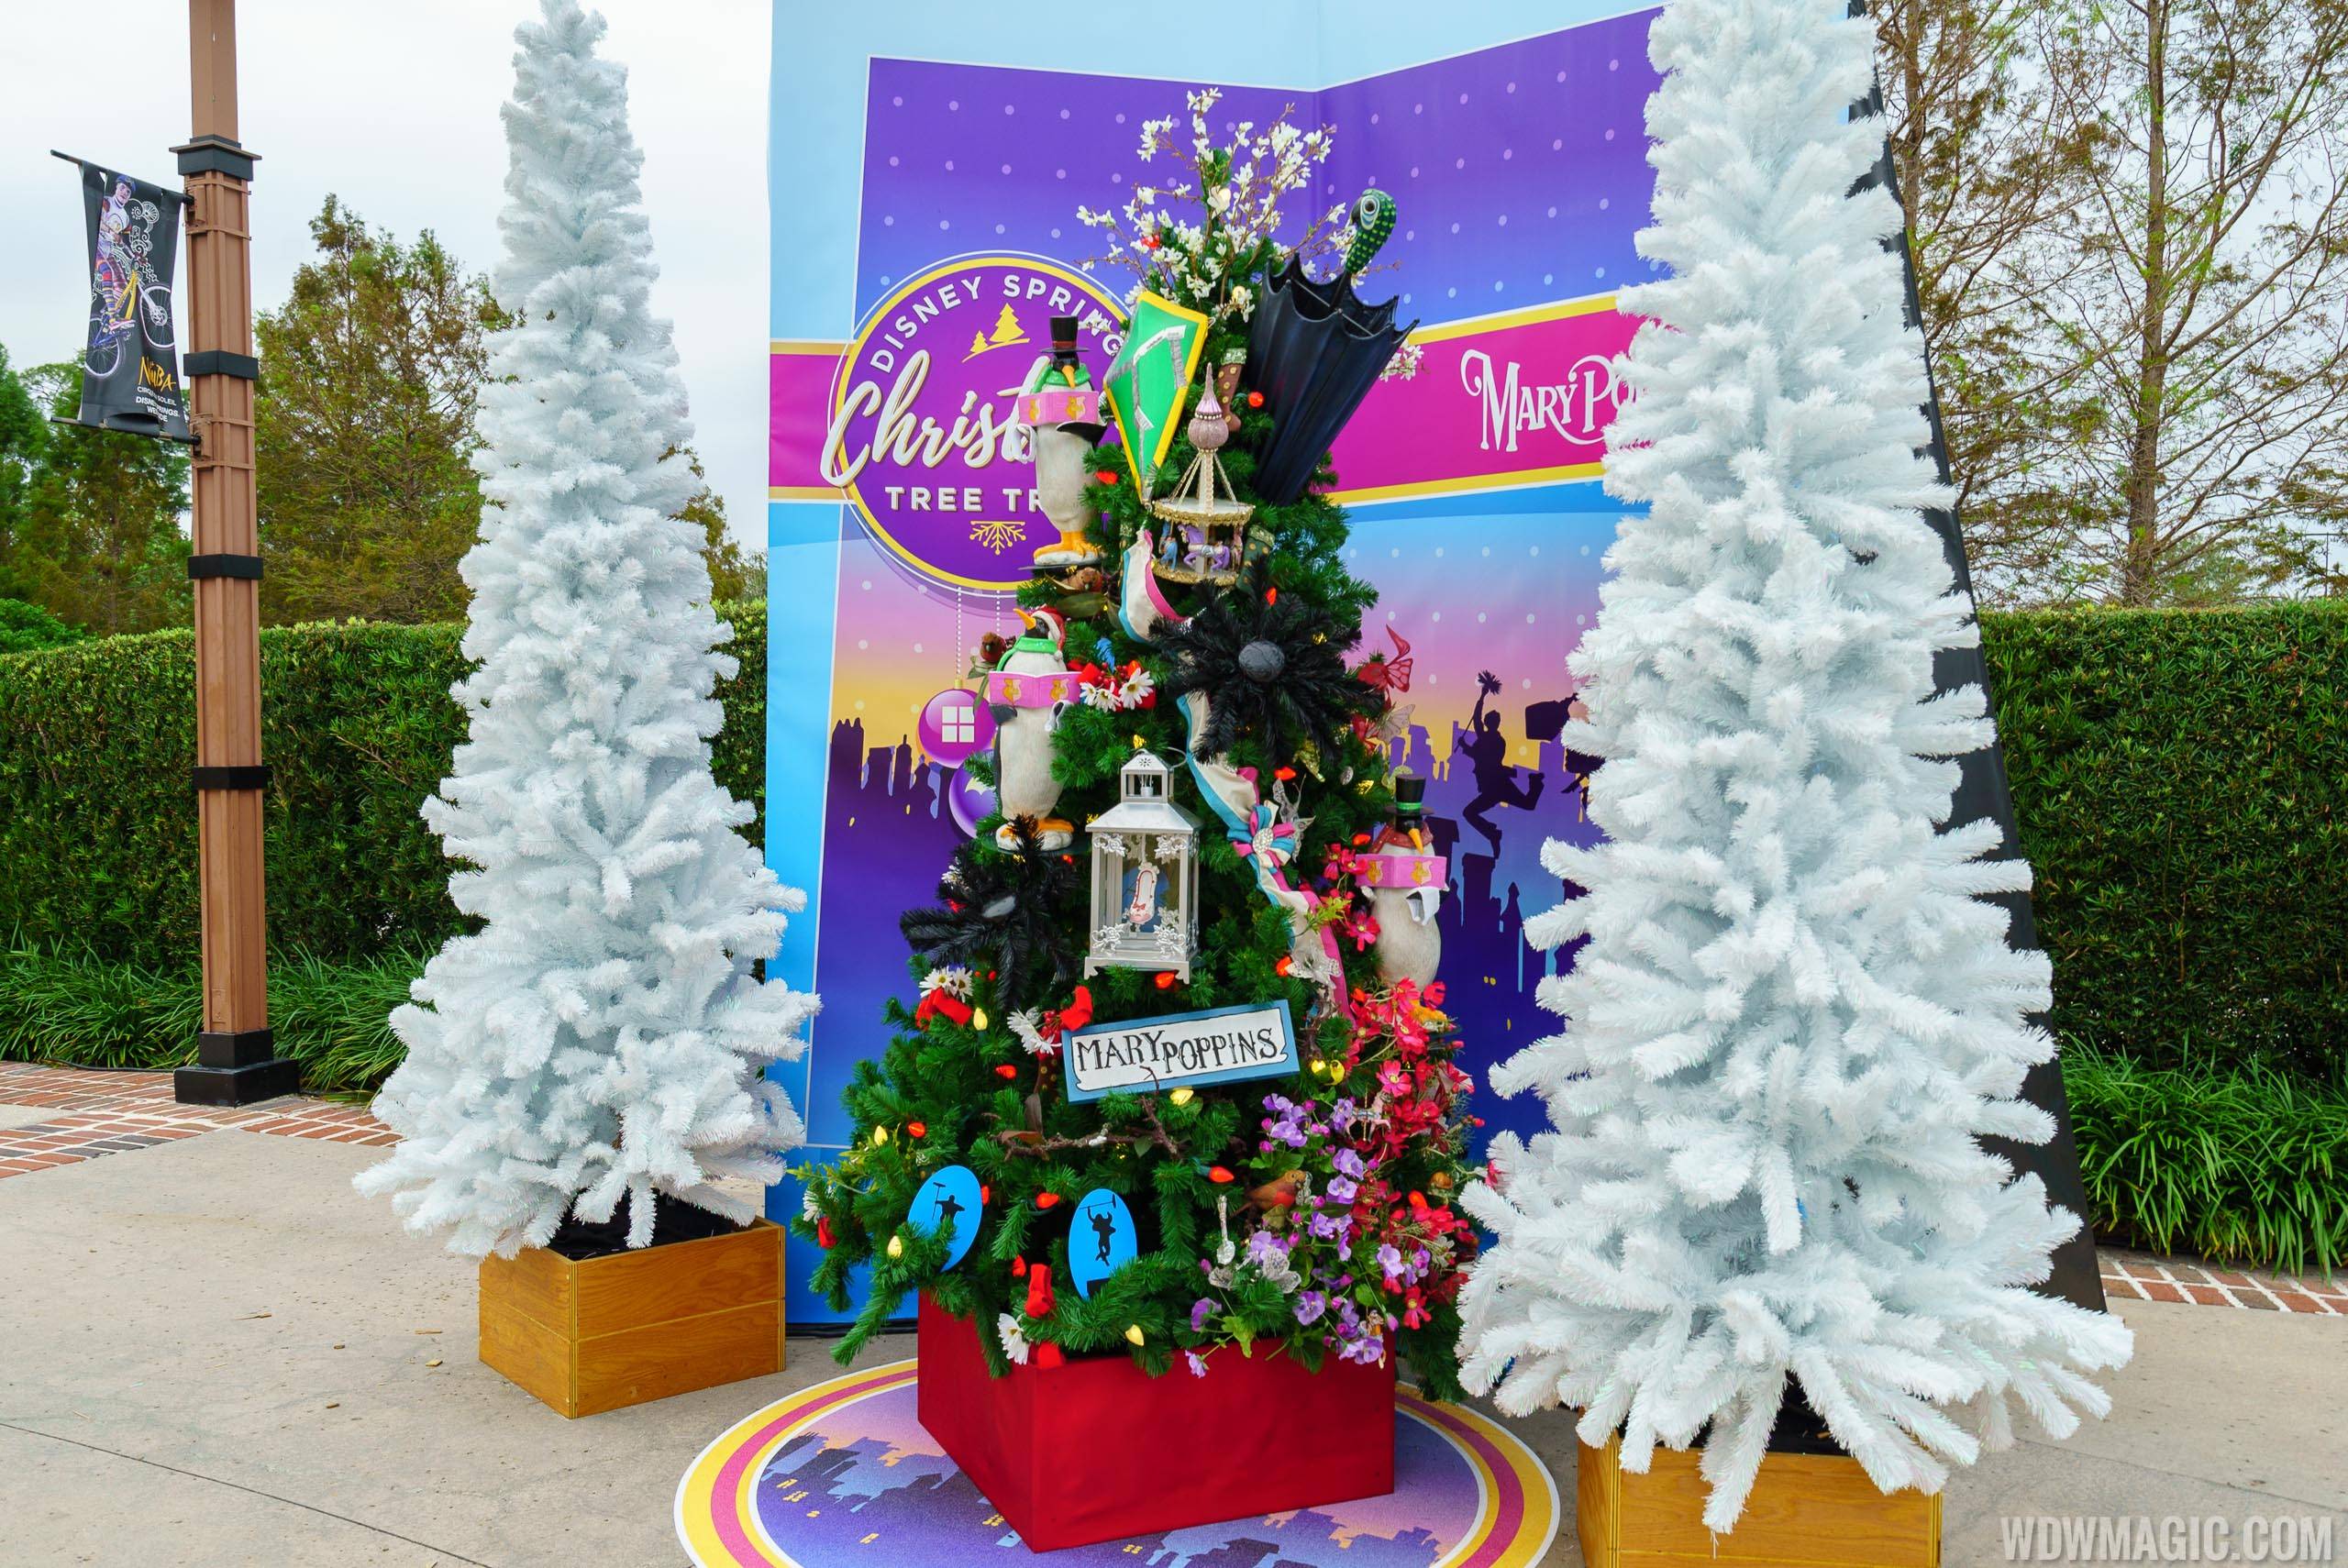 Disney Springs Christmas Tree Trail 2017